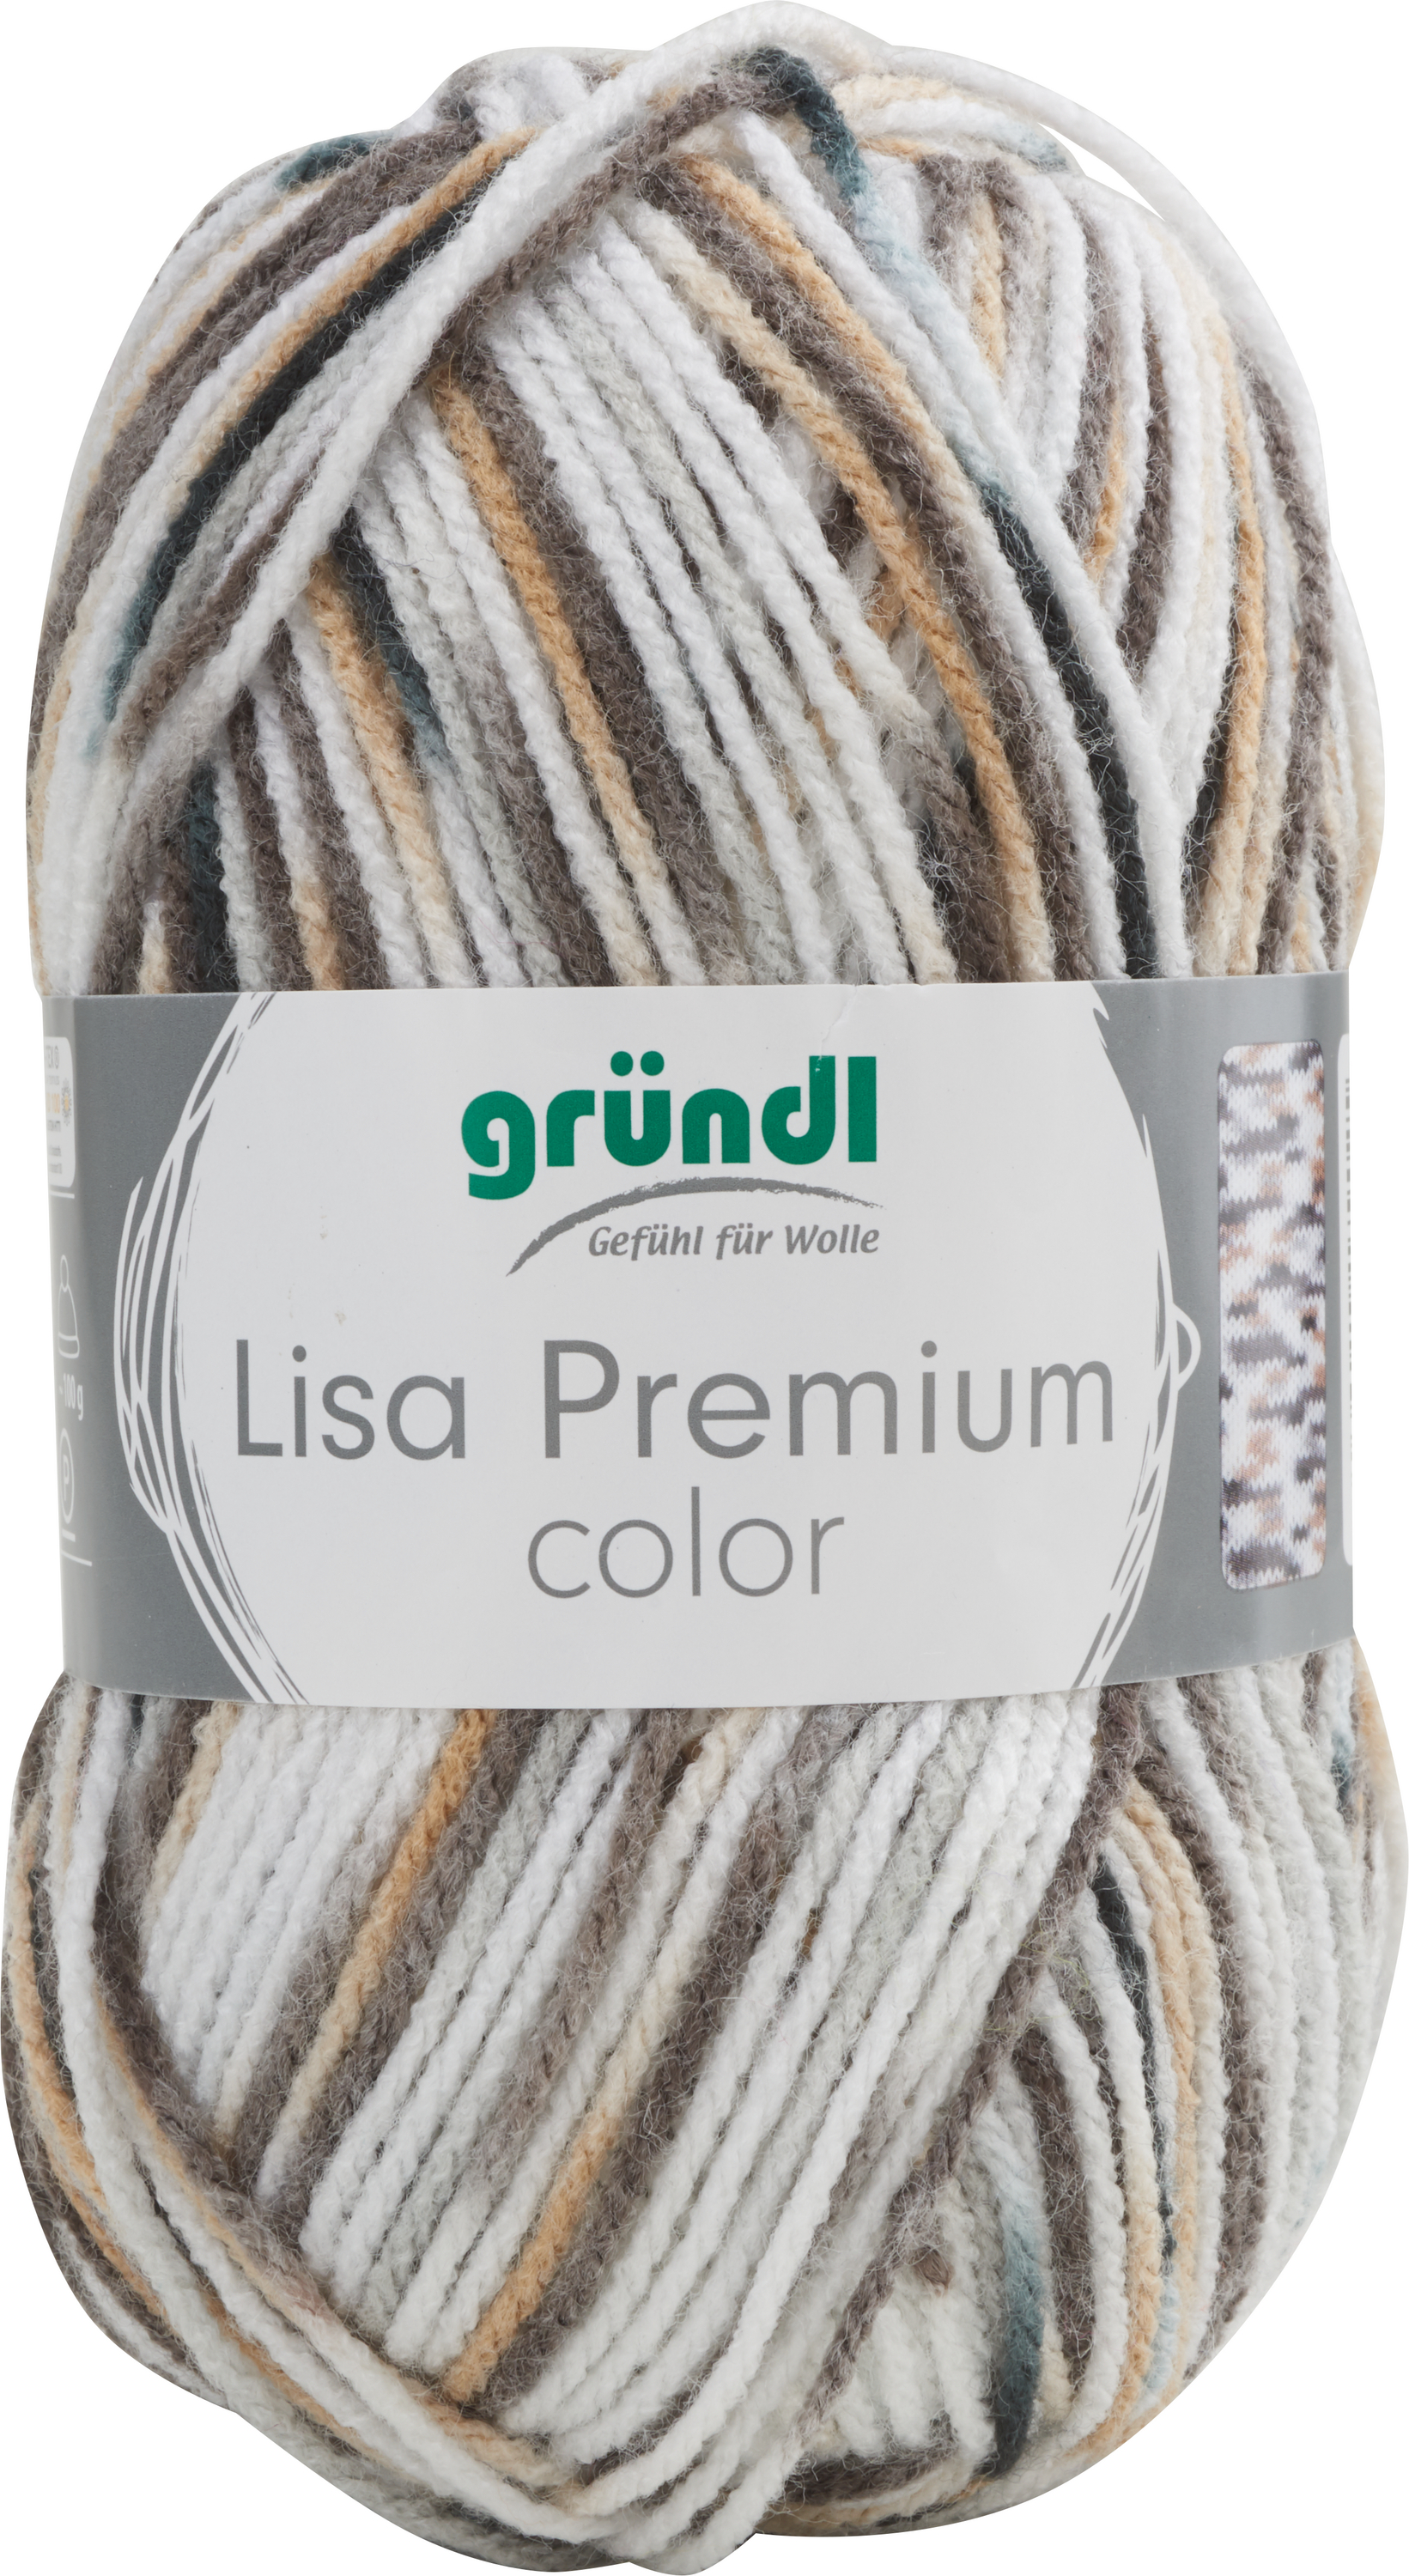 "Lisa Premium Color" VBS Hobby